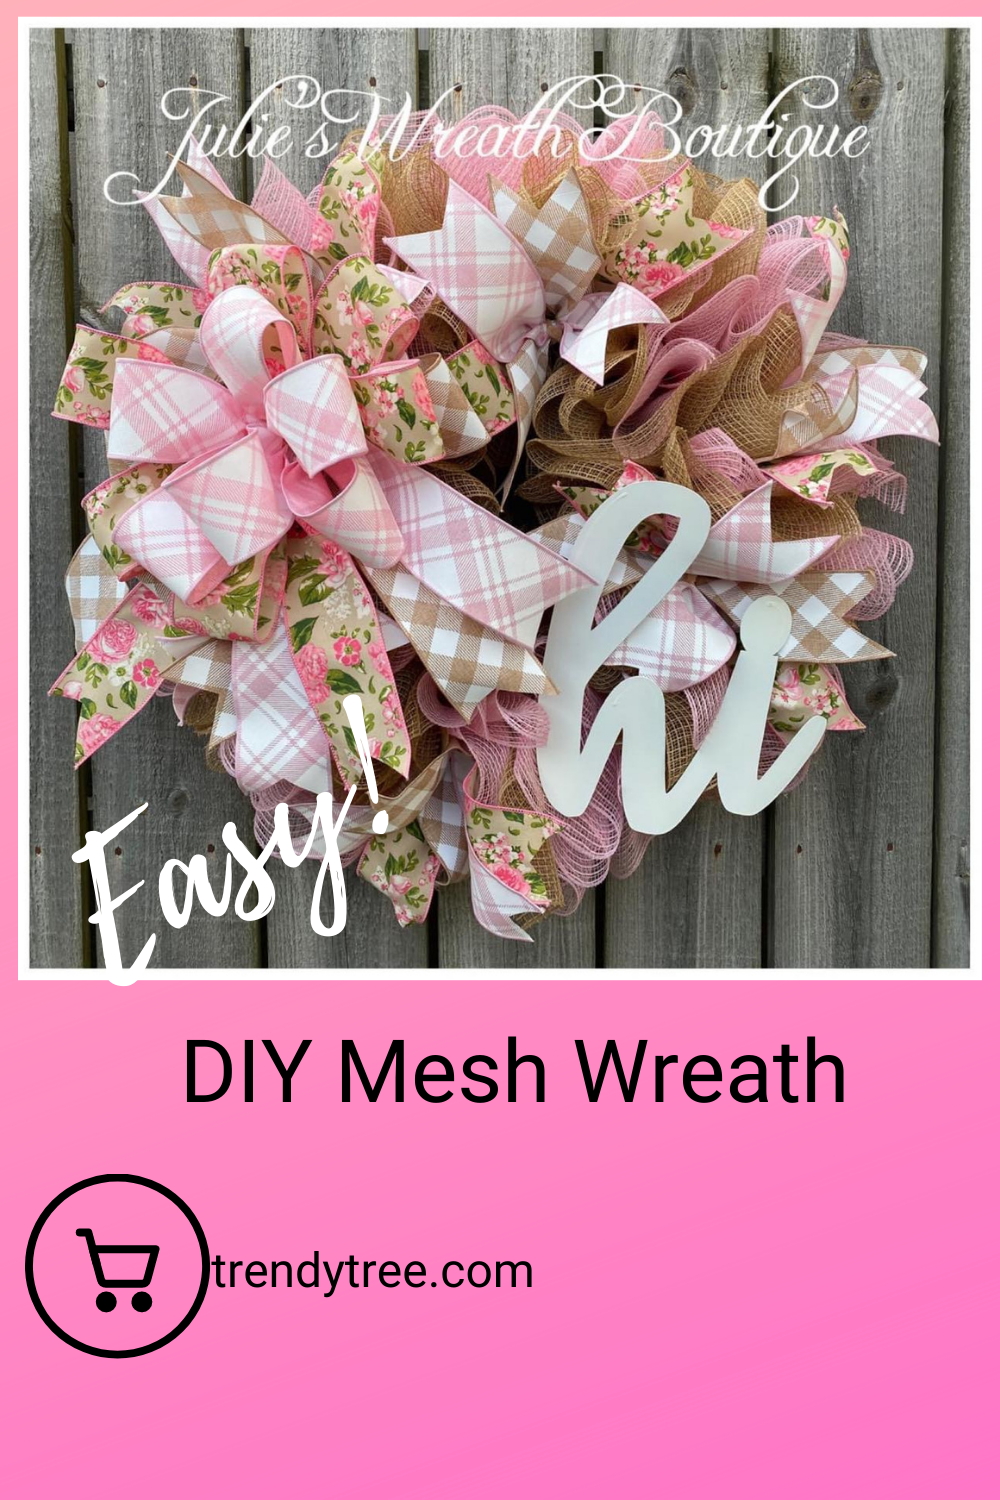 Easy Deco Mesh Ruffle Wreath Tutorial by Julie's Wreath Boutique